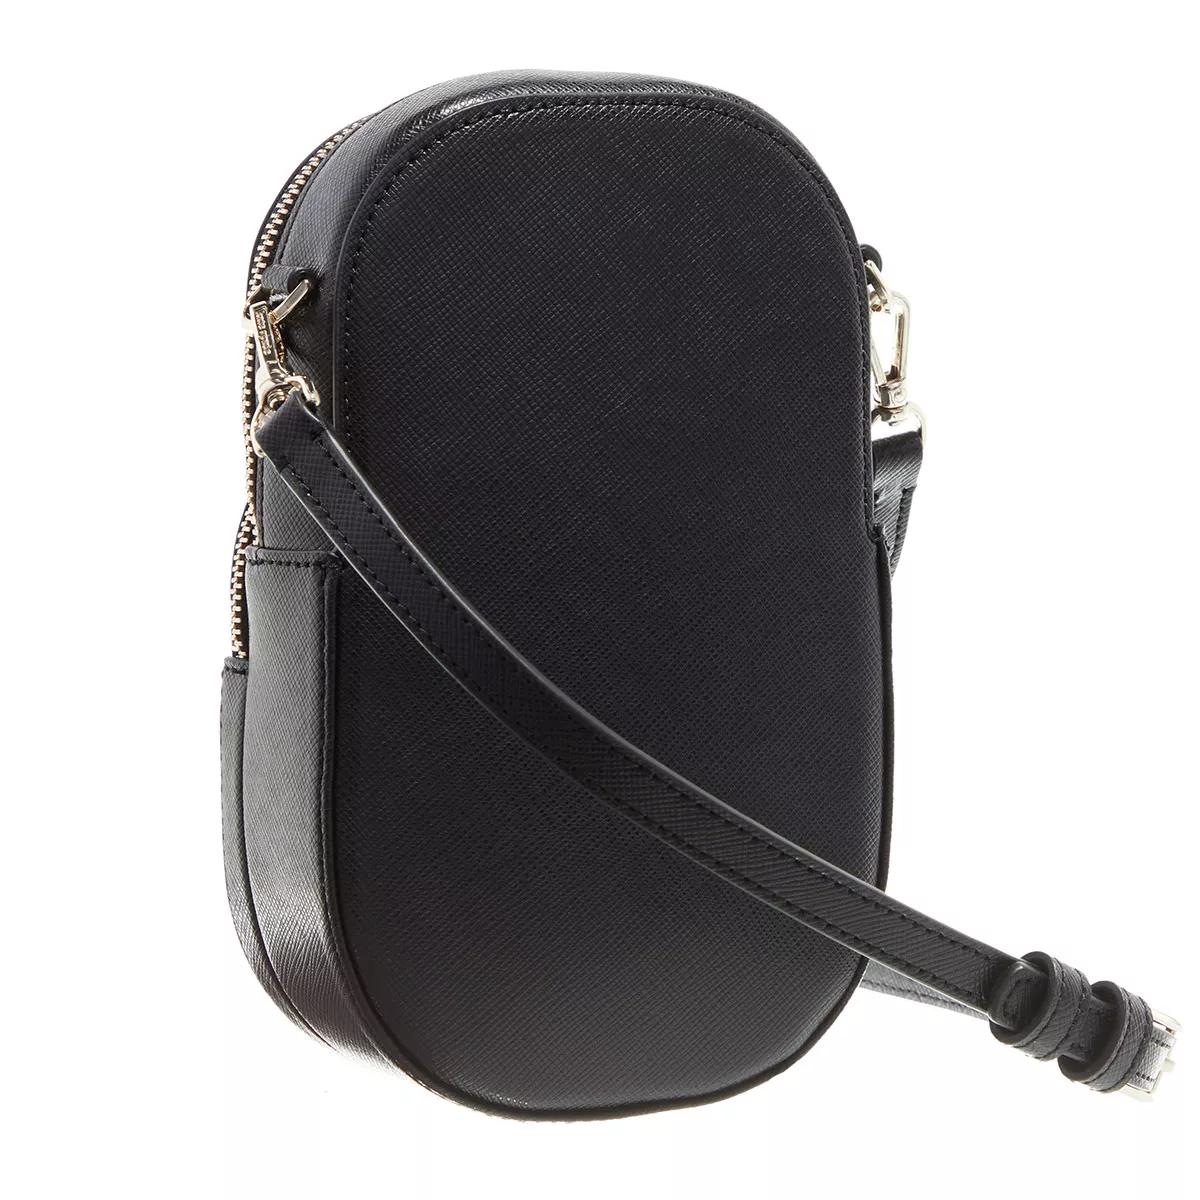 Kate Spade New York + Leather Smartphone Crossbody Bag